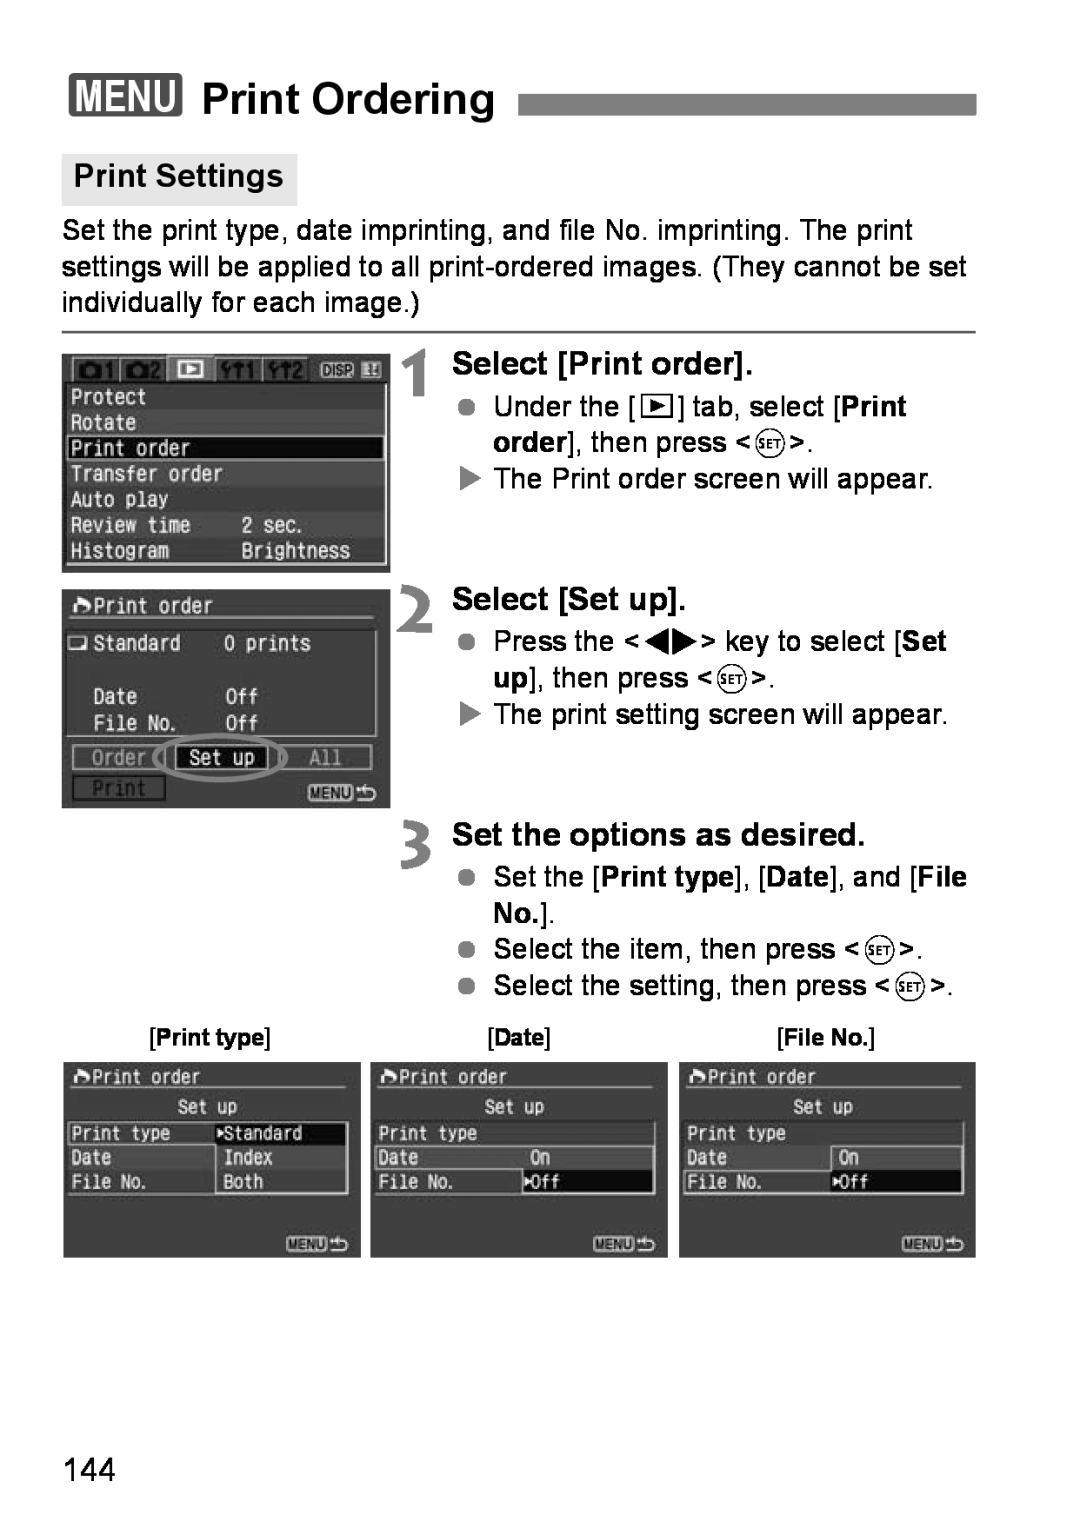 Canon EOS DIGITAL REBEL XTI 3Print Ordering, Print Settings, Select Print order, Select Set up, Set the options as desired 